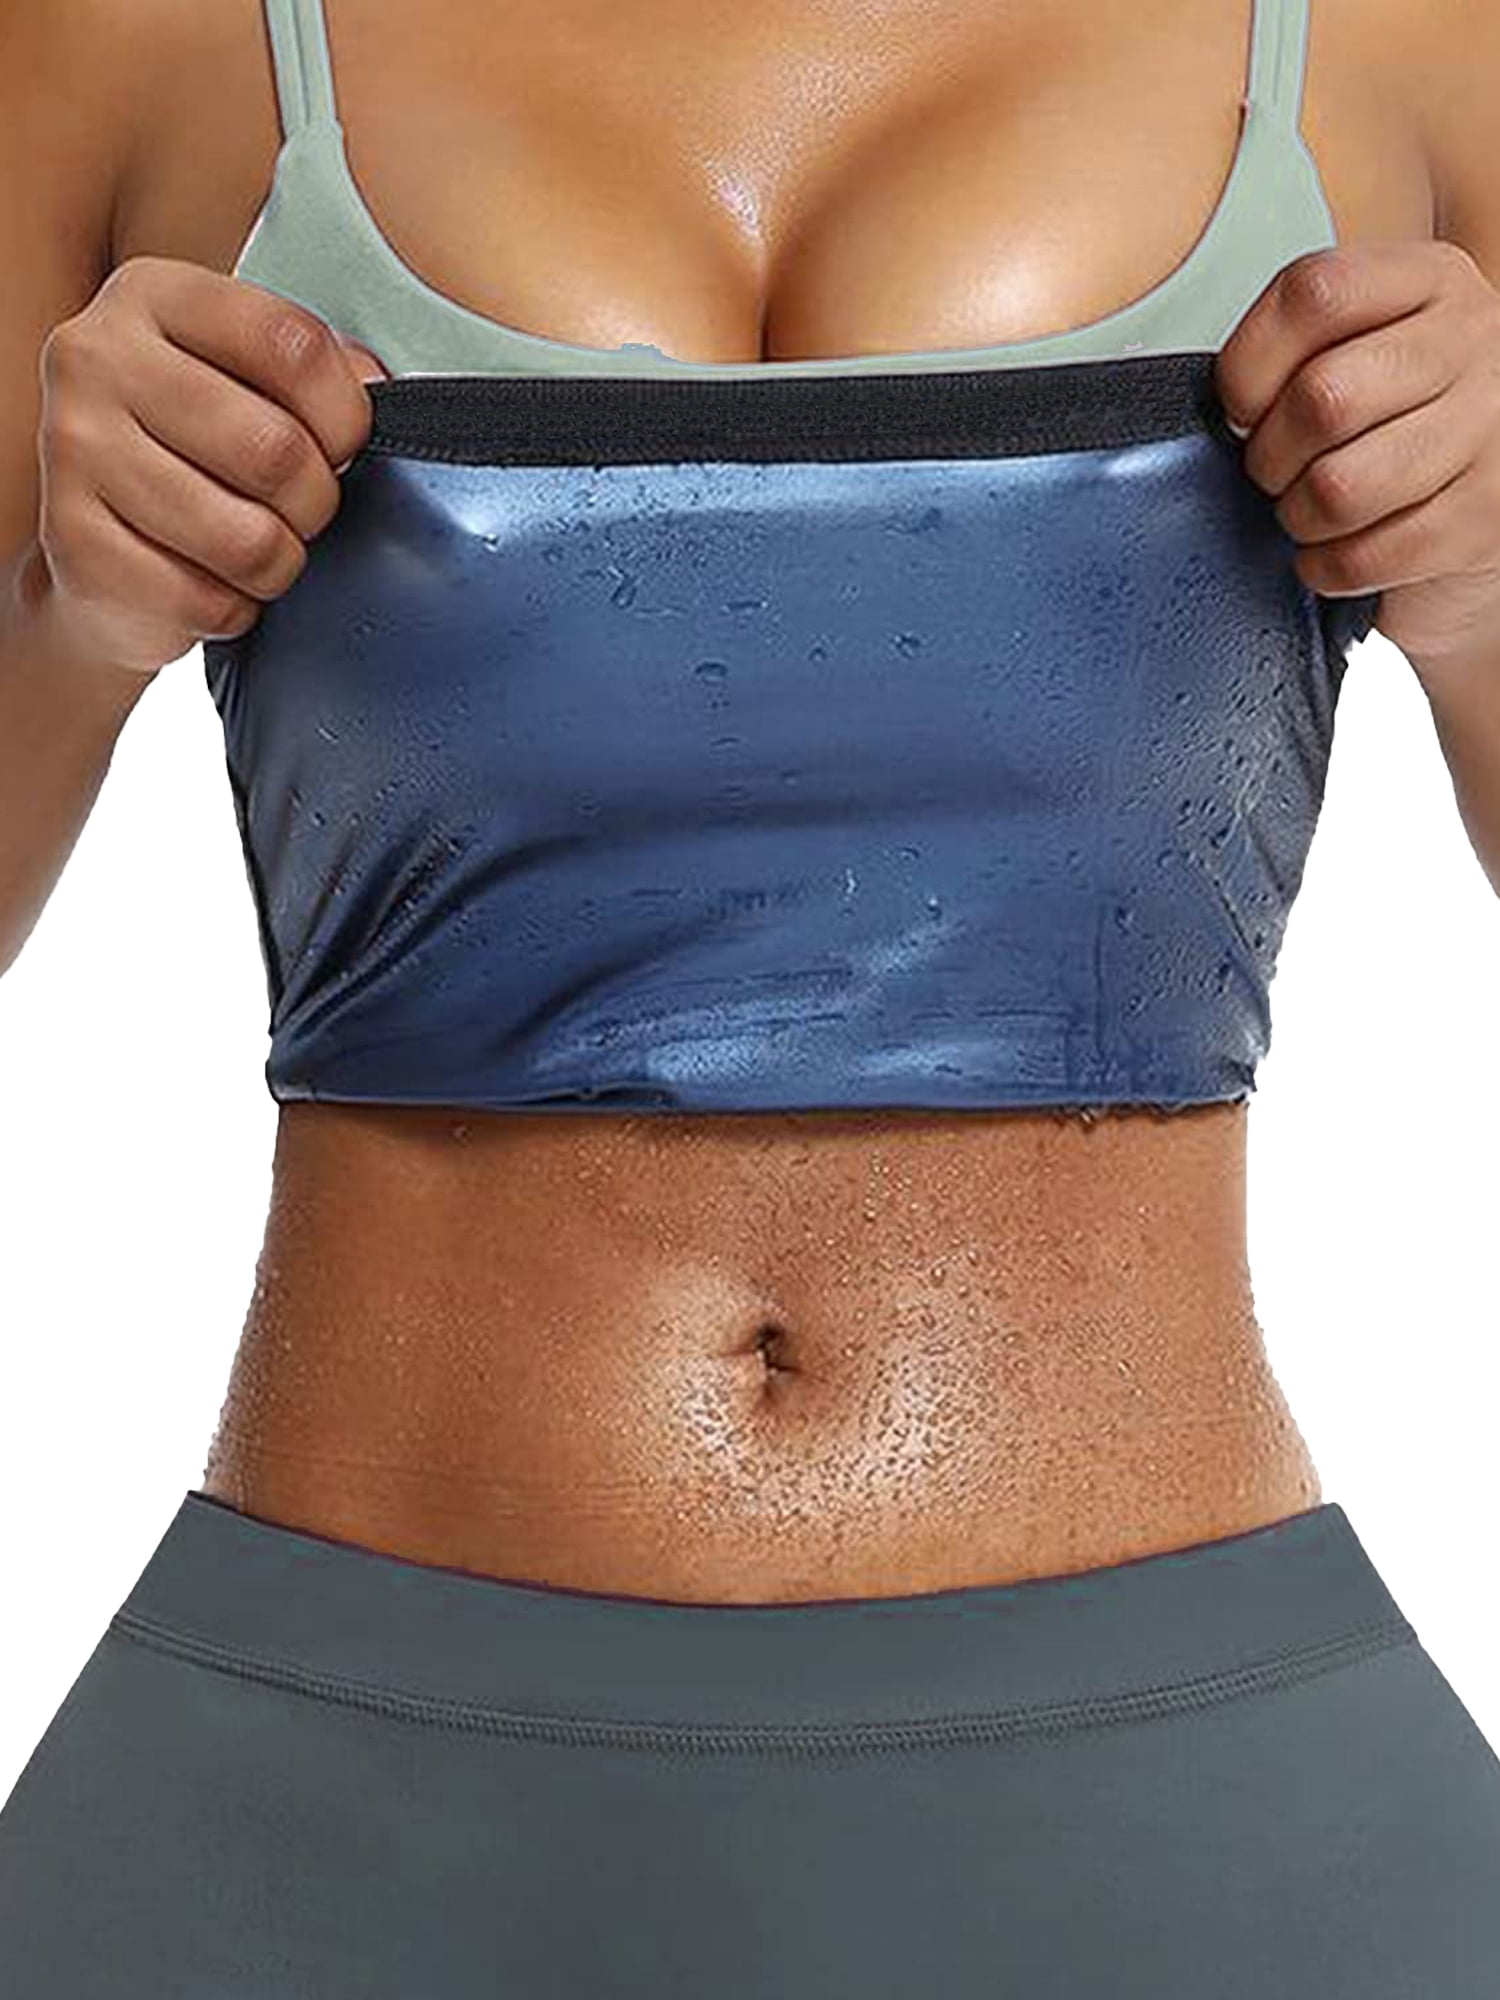 Lilvigor Waist Trainer For Women Sauna Slimming Belt Sweat, 51% OFF